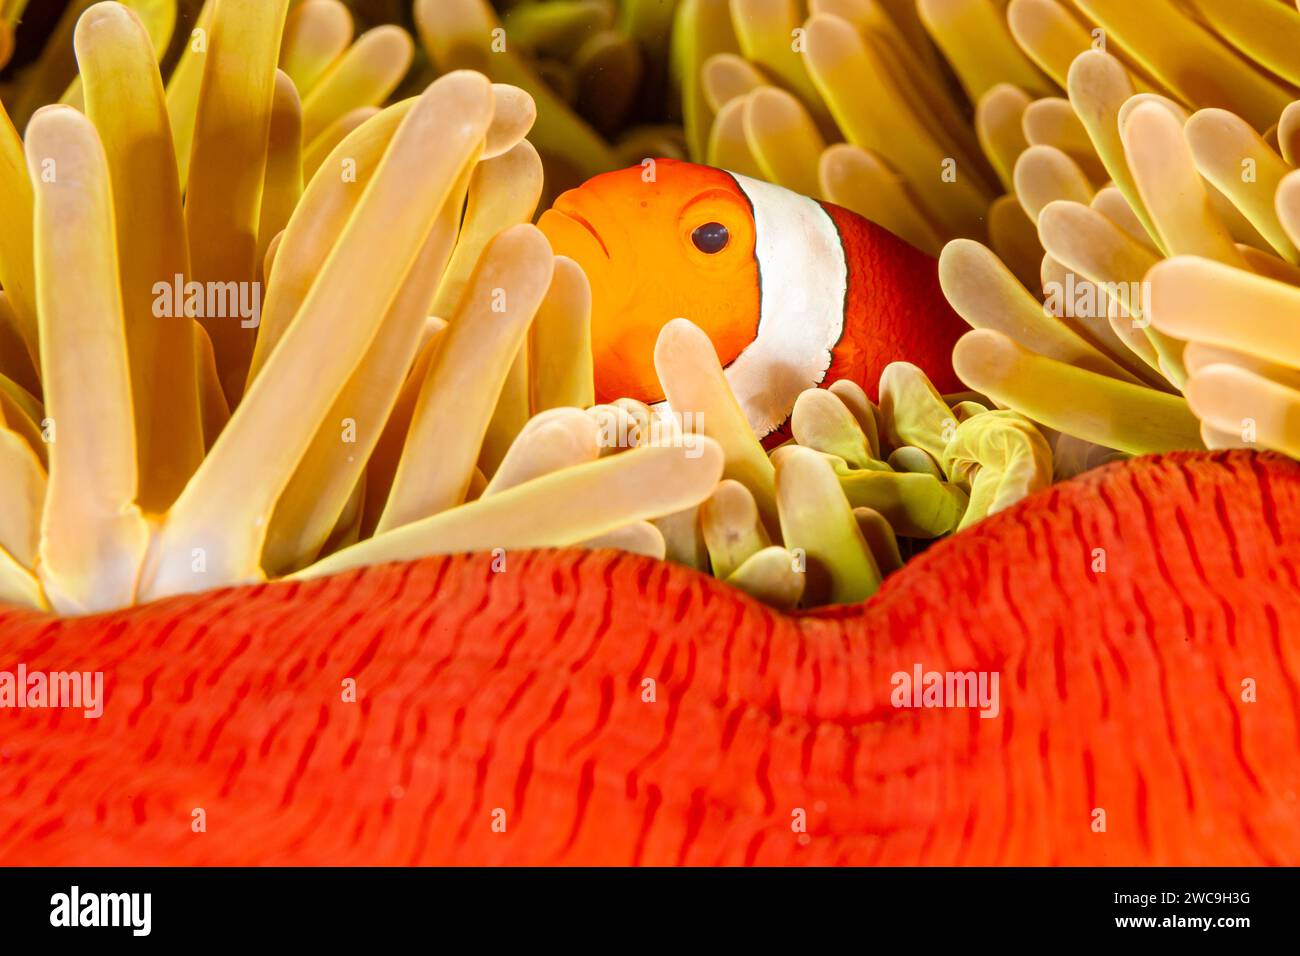 Malaysia, Sabah, Mabul, Ocellaris Clownfish (Amphiprion ocellaris) in Sea Anemone (Heteractis magnifica) Stock Photo